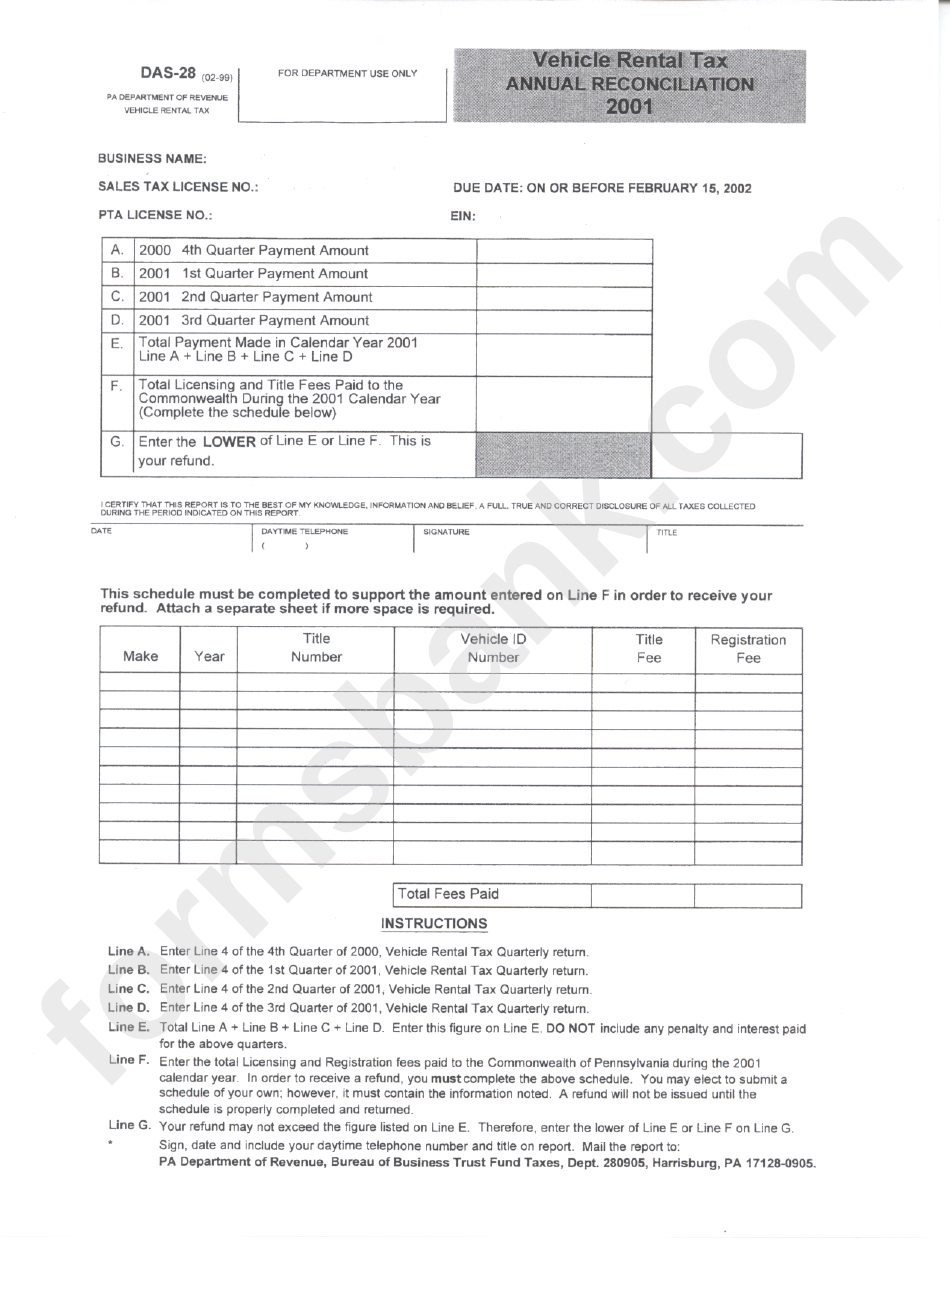 Form Das-28 - Vehicle Rental Tax Annual Reconciliation - 2001